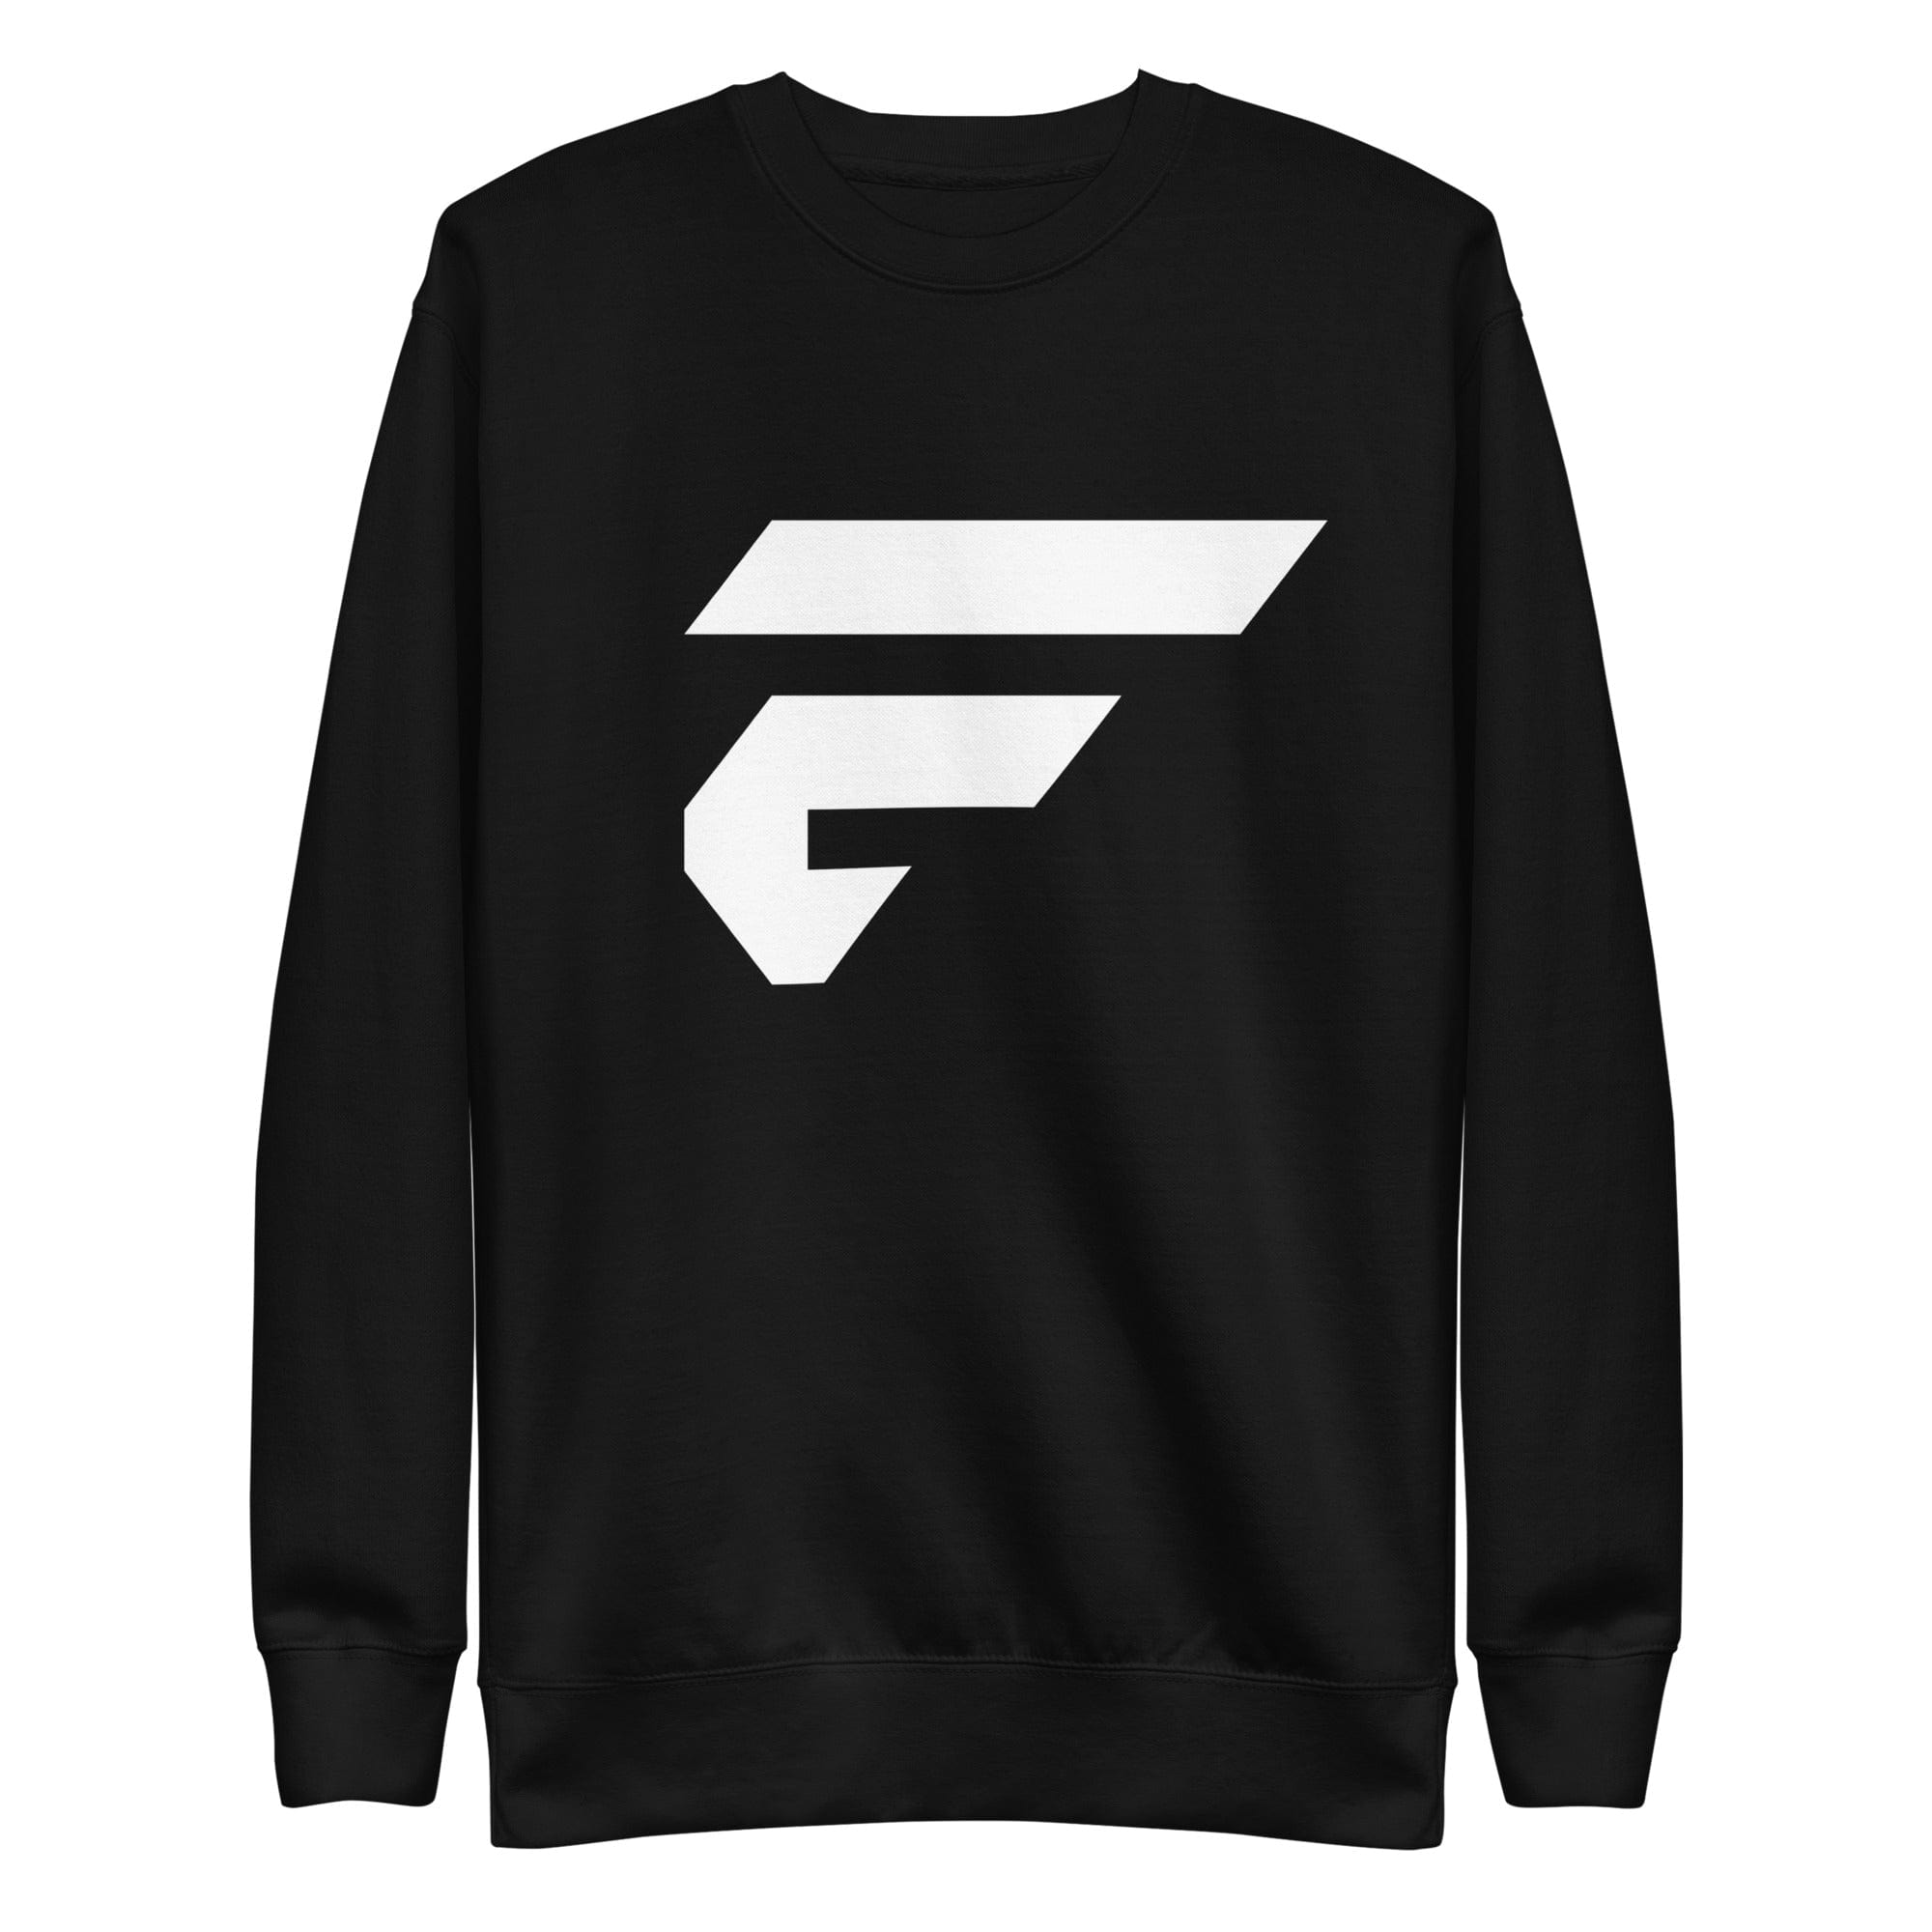 Black unisex sweatshirt with Fire Cornhole F logo in white